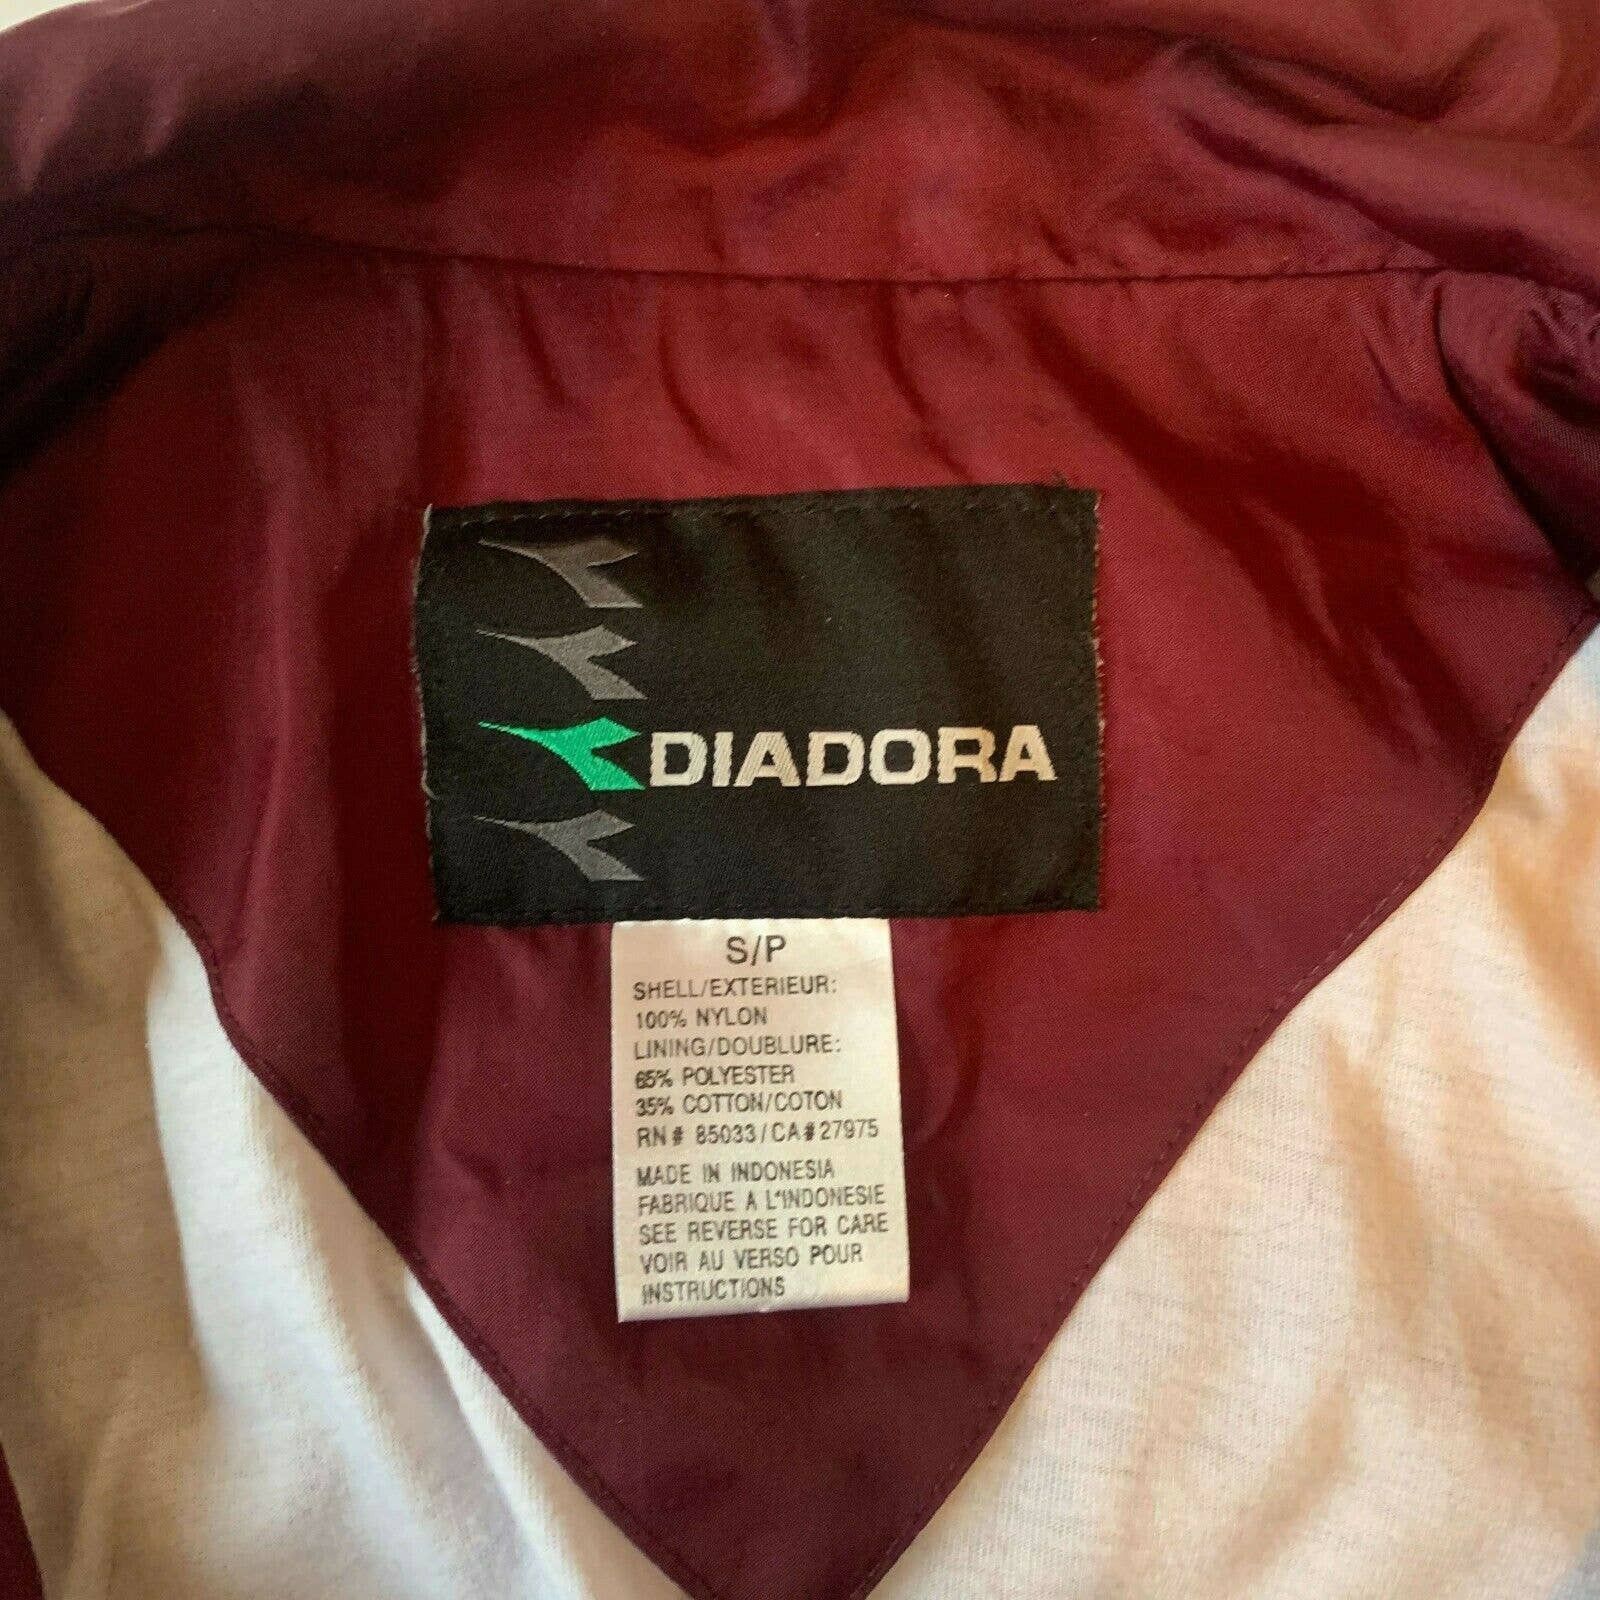 Diadora DIADORA Vintage 1980s 90s Tracksuit Jacket Top Size US S / EU 44-46 / 1 - 8 Preview